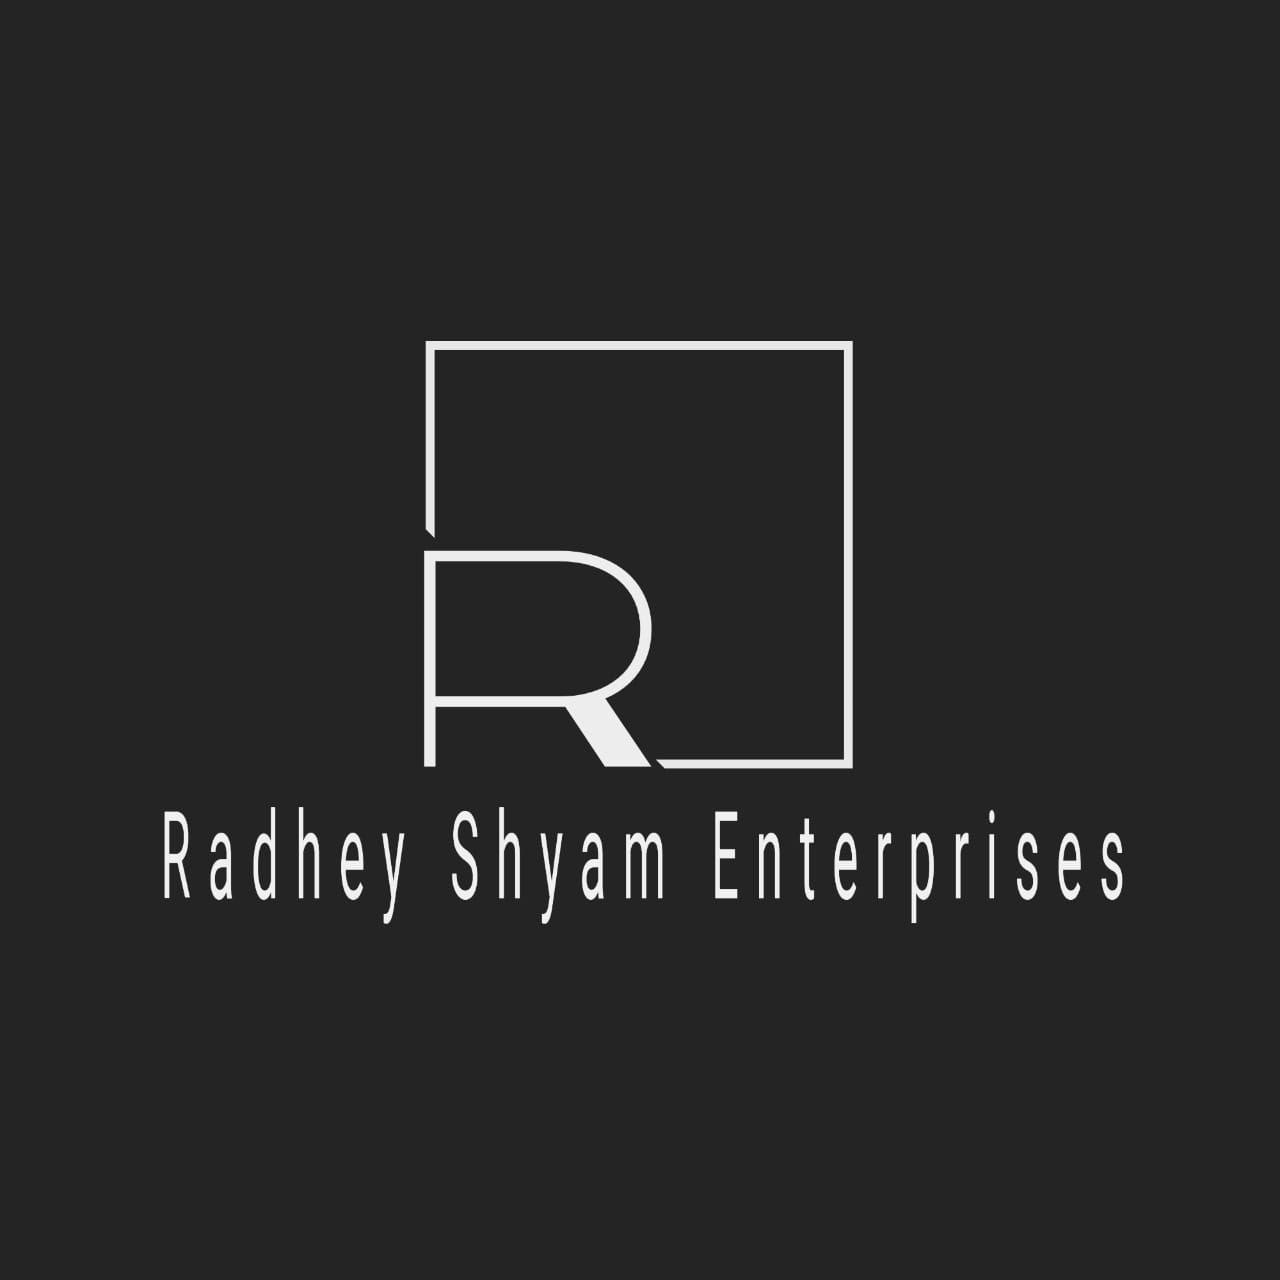 RADHEY SHYAM ENTERPRISES